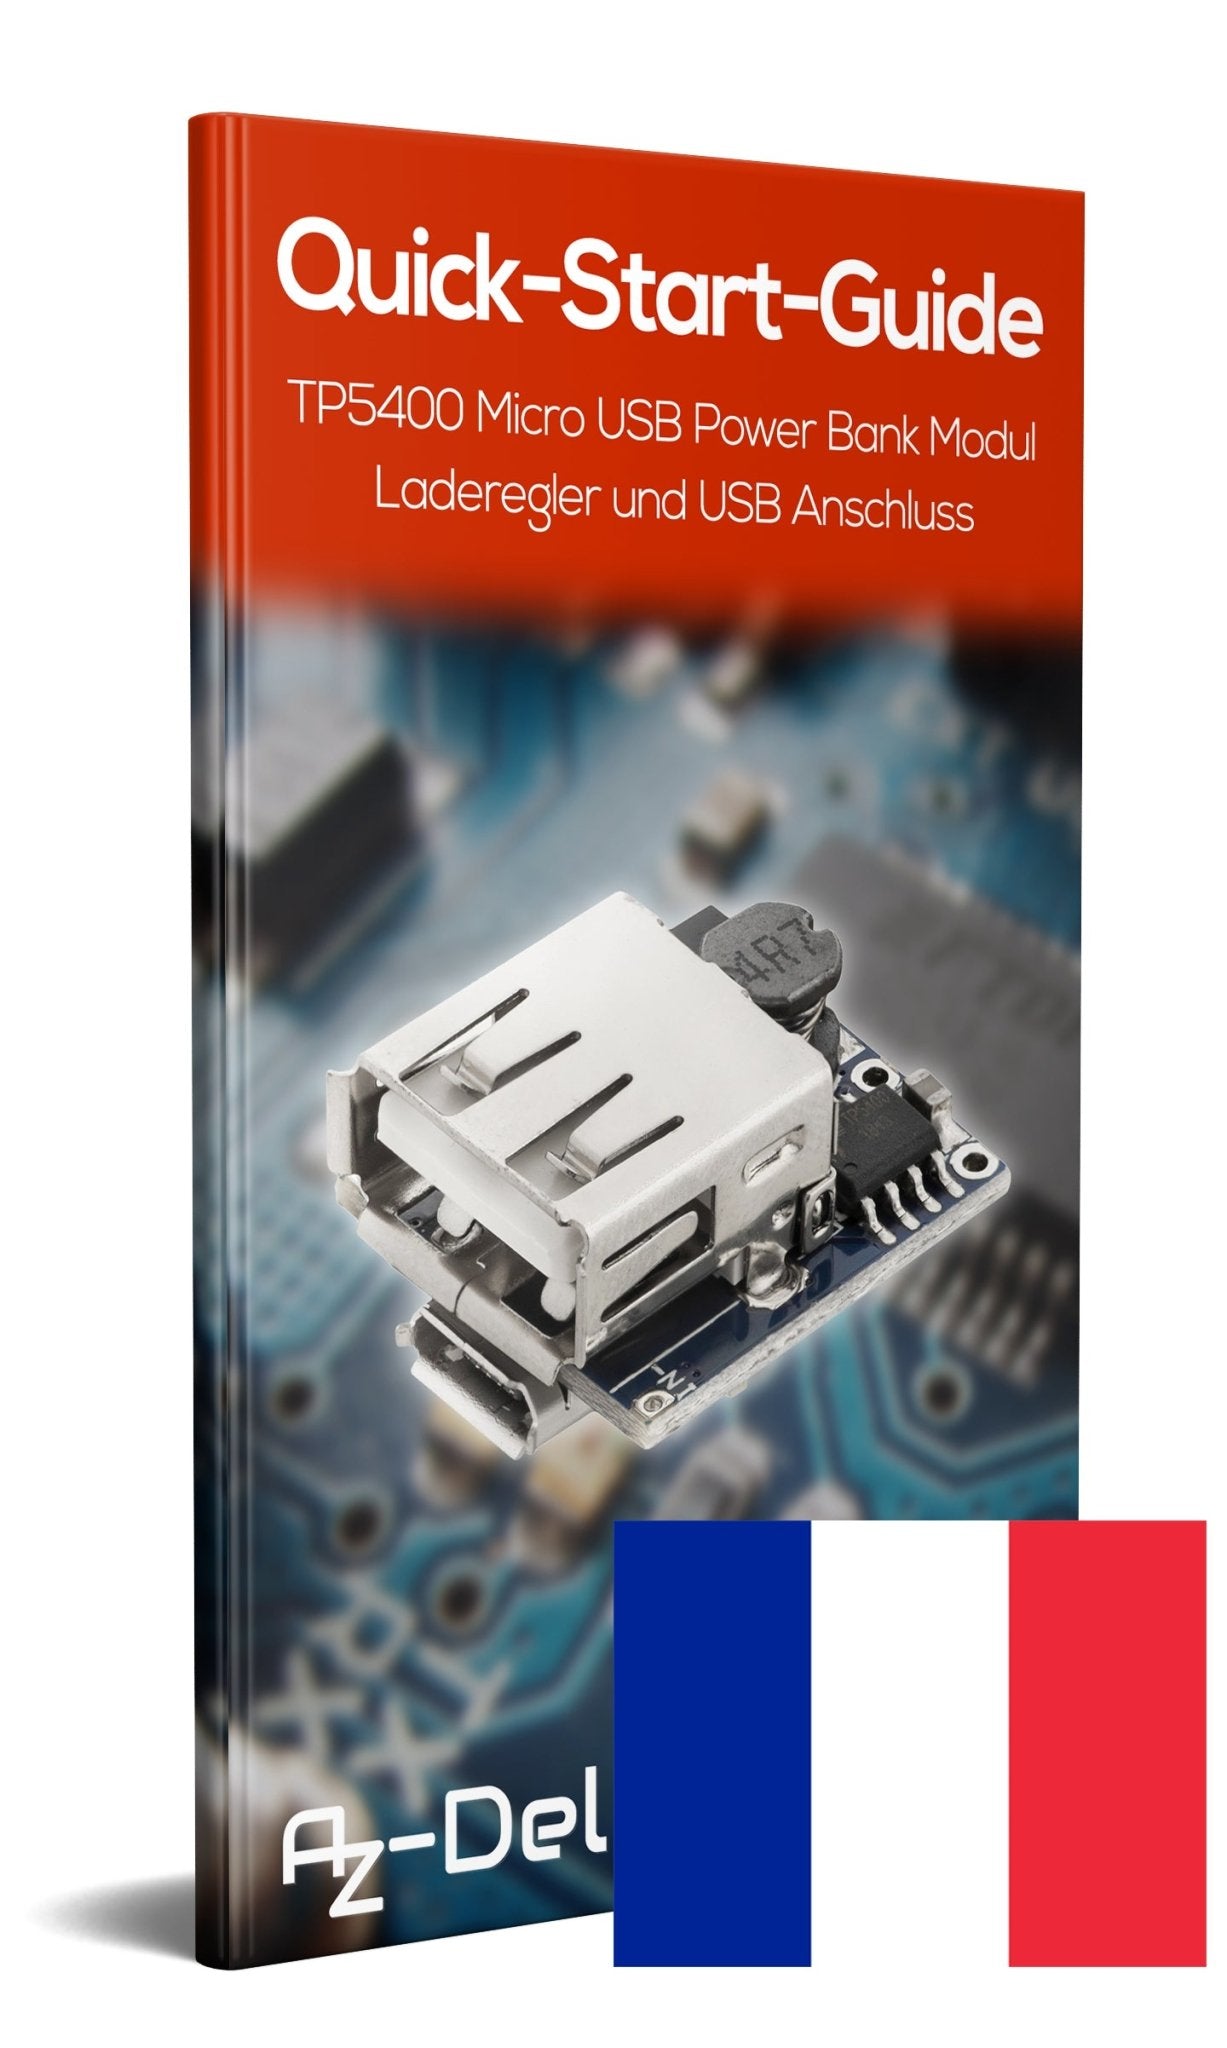 TP5400 Micro USB Power Bank Modul Laderegler und USB Anschluss - AZ-Delivery